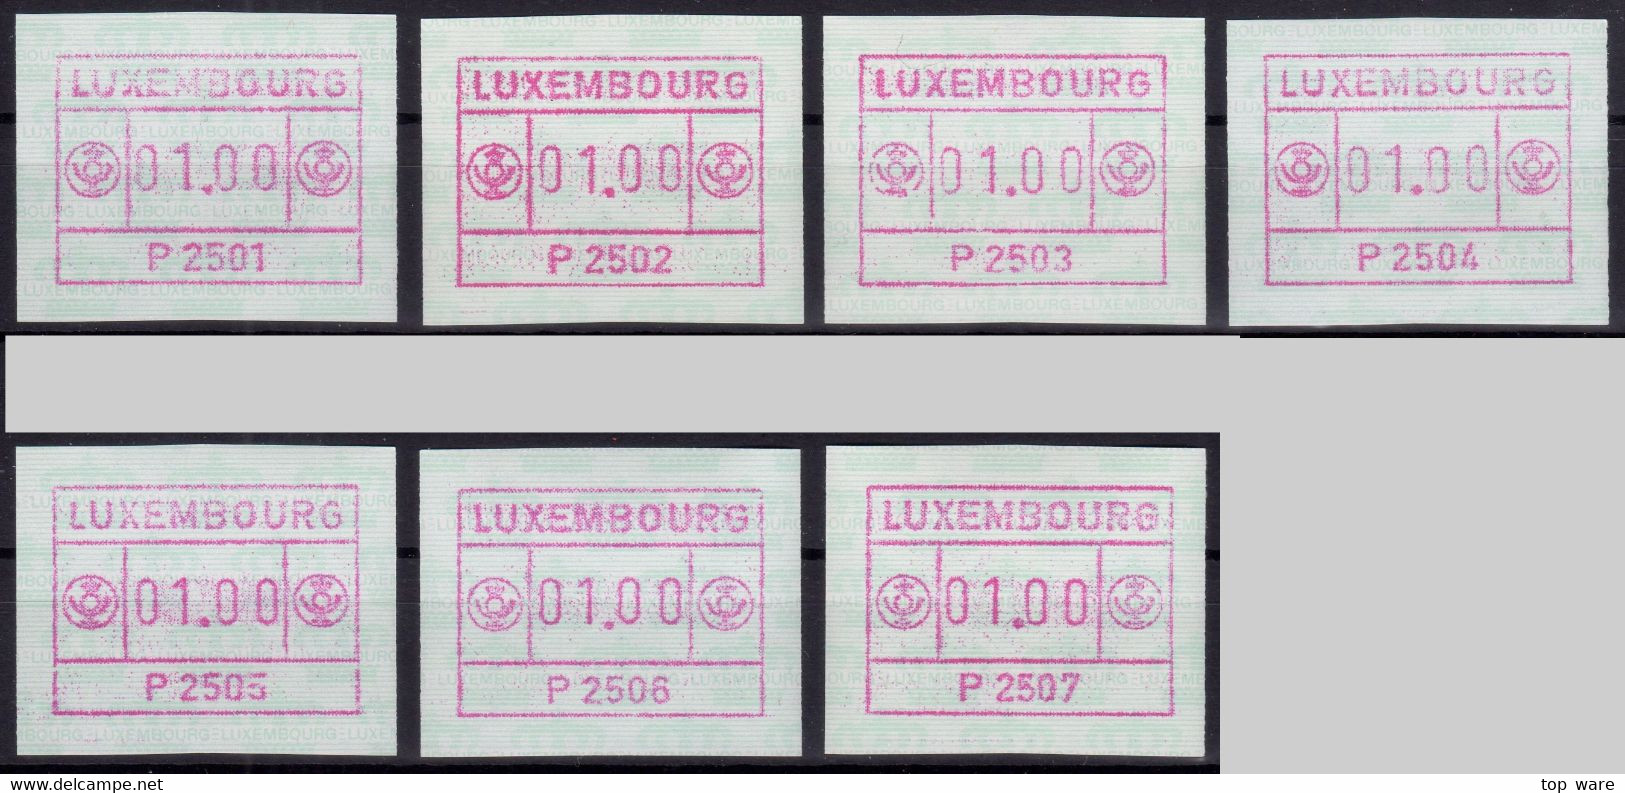 Luxemburg Luxembourg Timbres ATM 1-9 / Automatenmarken 1983-2021 Komplett, Postfrisch / Distributeurs Etiquetas - Automatenmarken